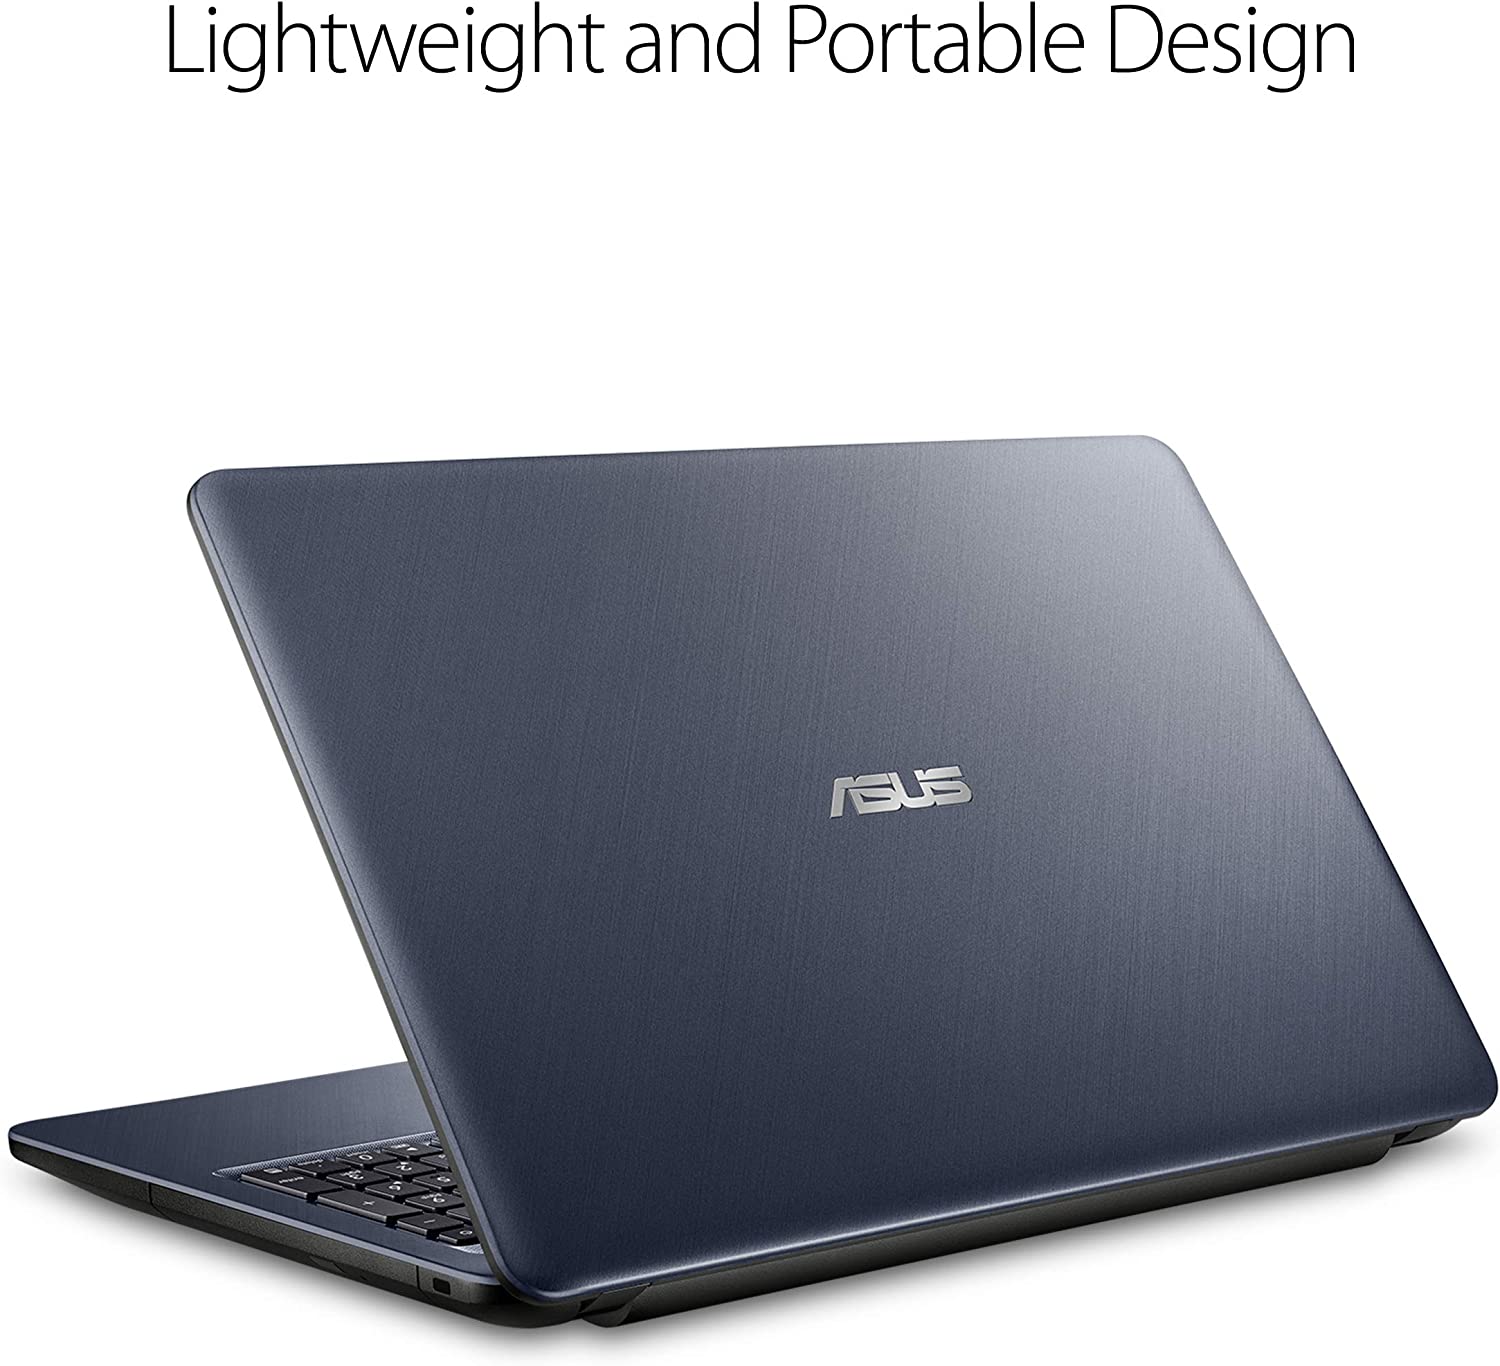 ASUS 90NB0IR7-M10510 15.6” HD Laptop Celeron N4000, 1TB HDD, Star Gray - $225